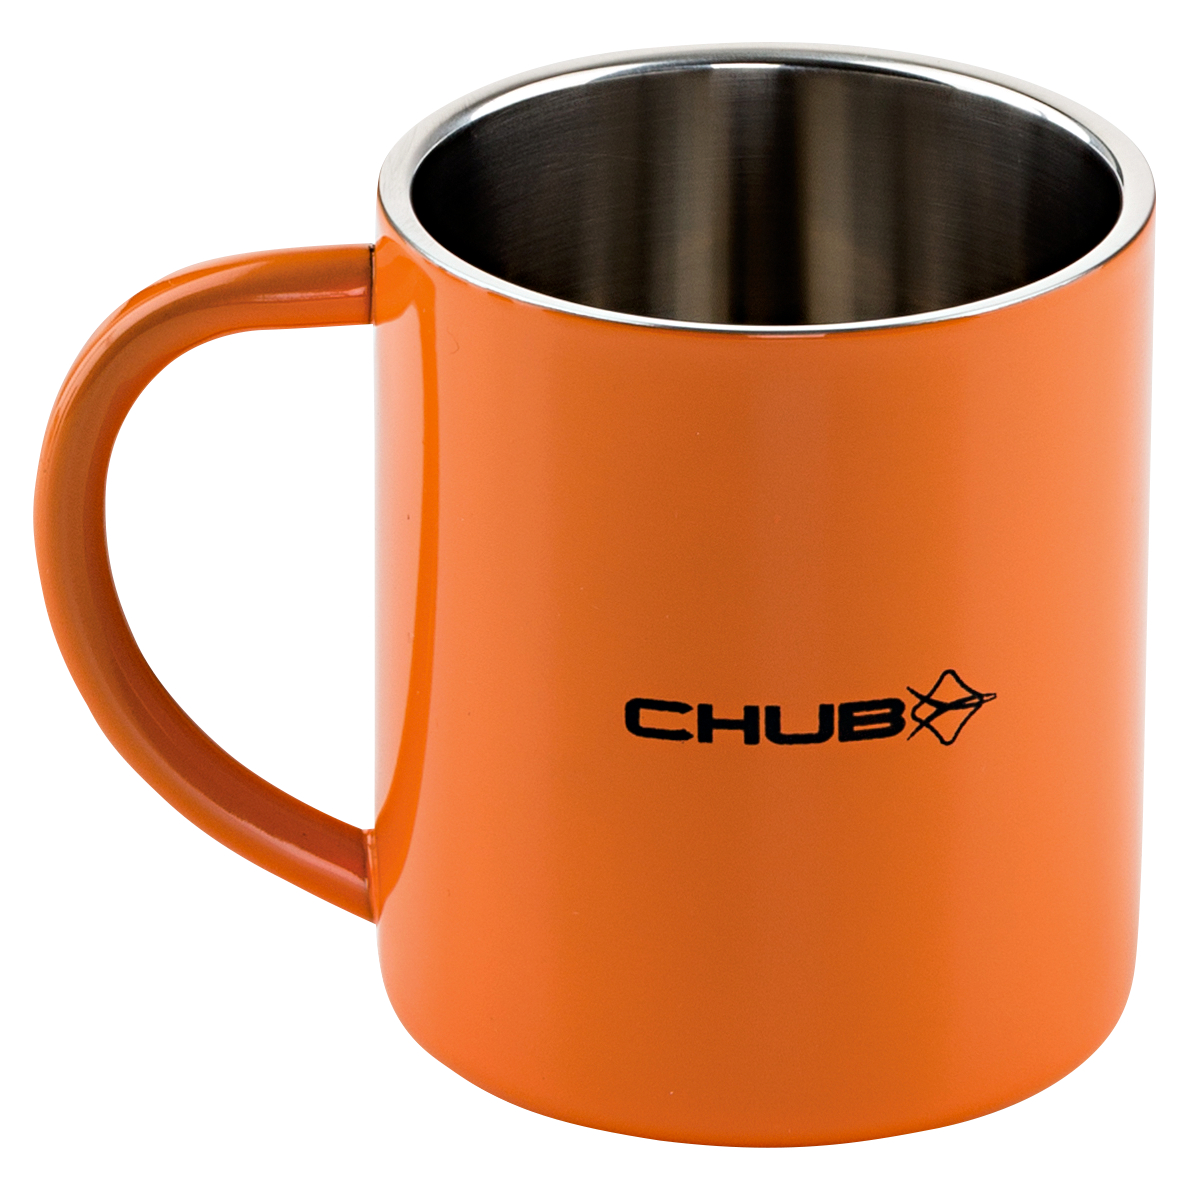 Chub Chub Stainless Steel Mug 